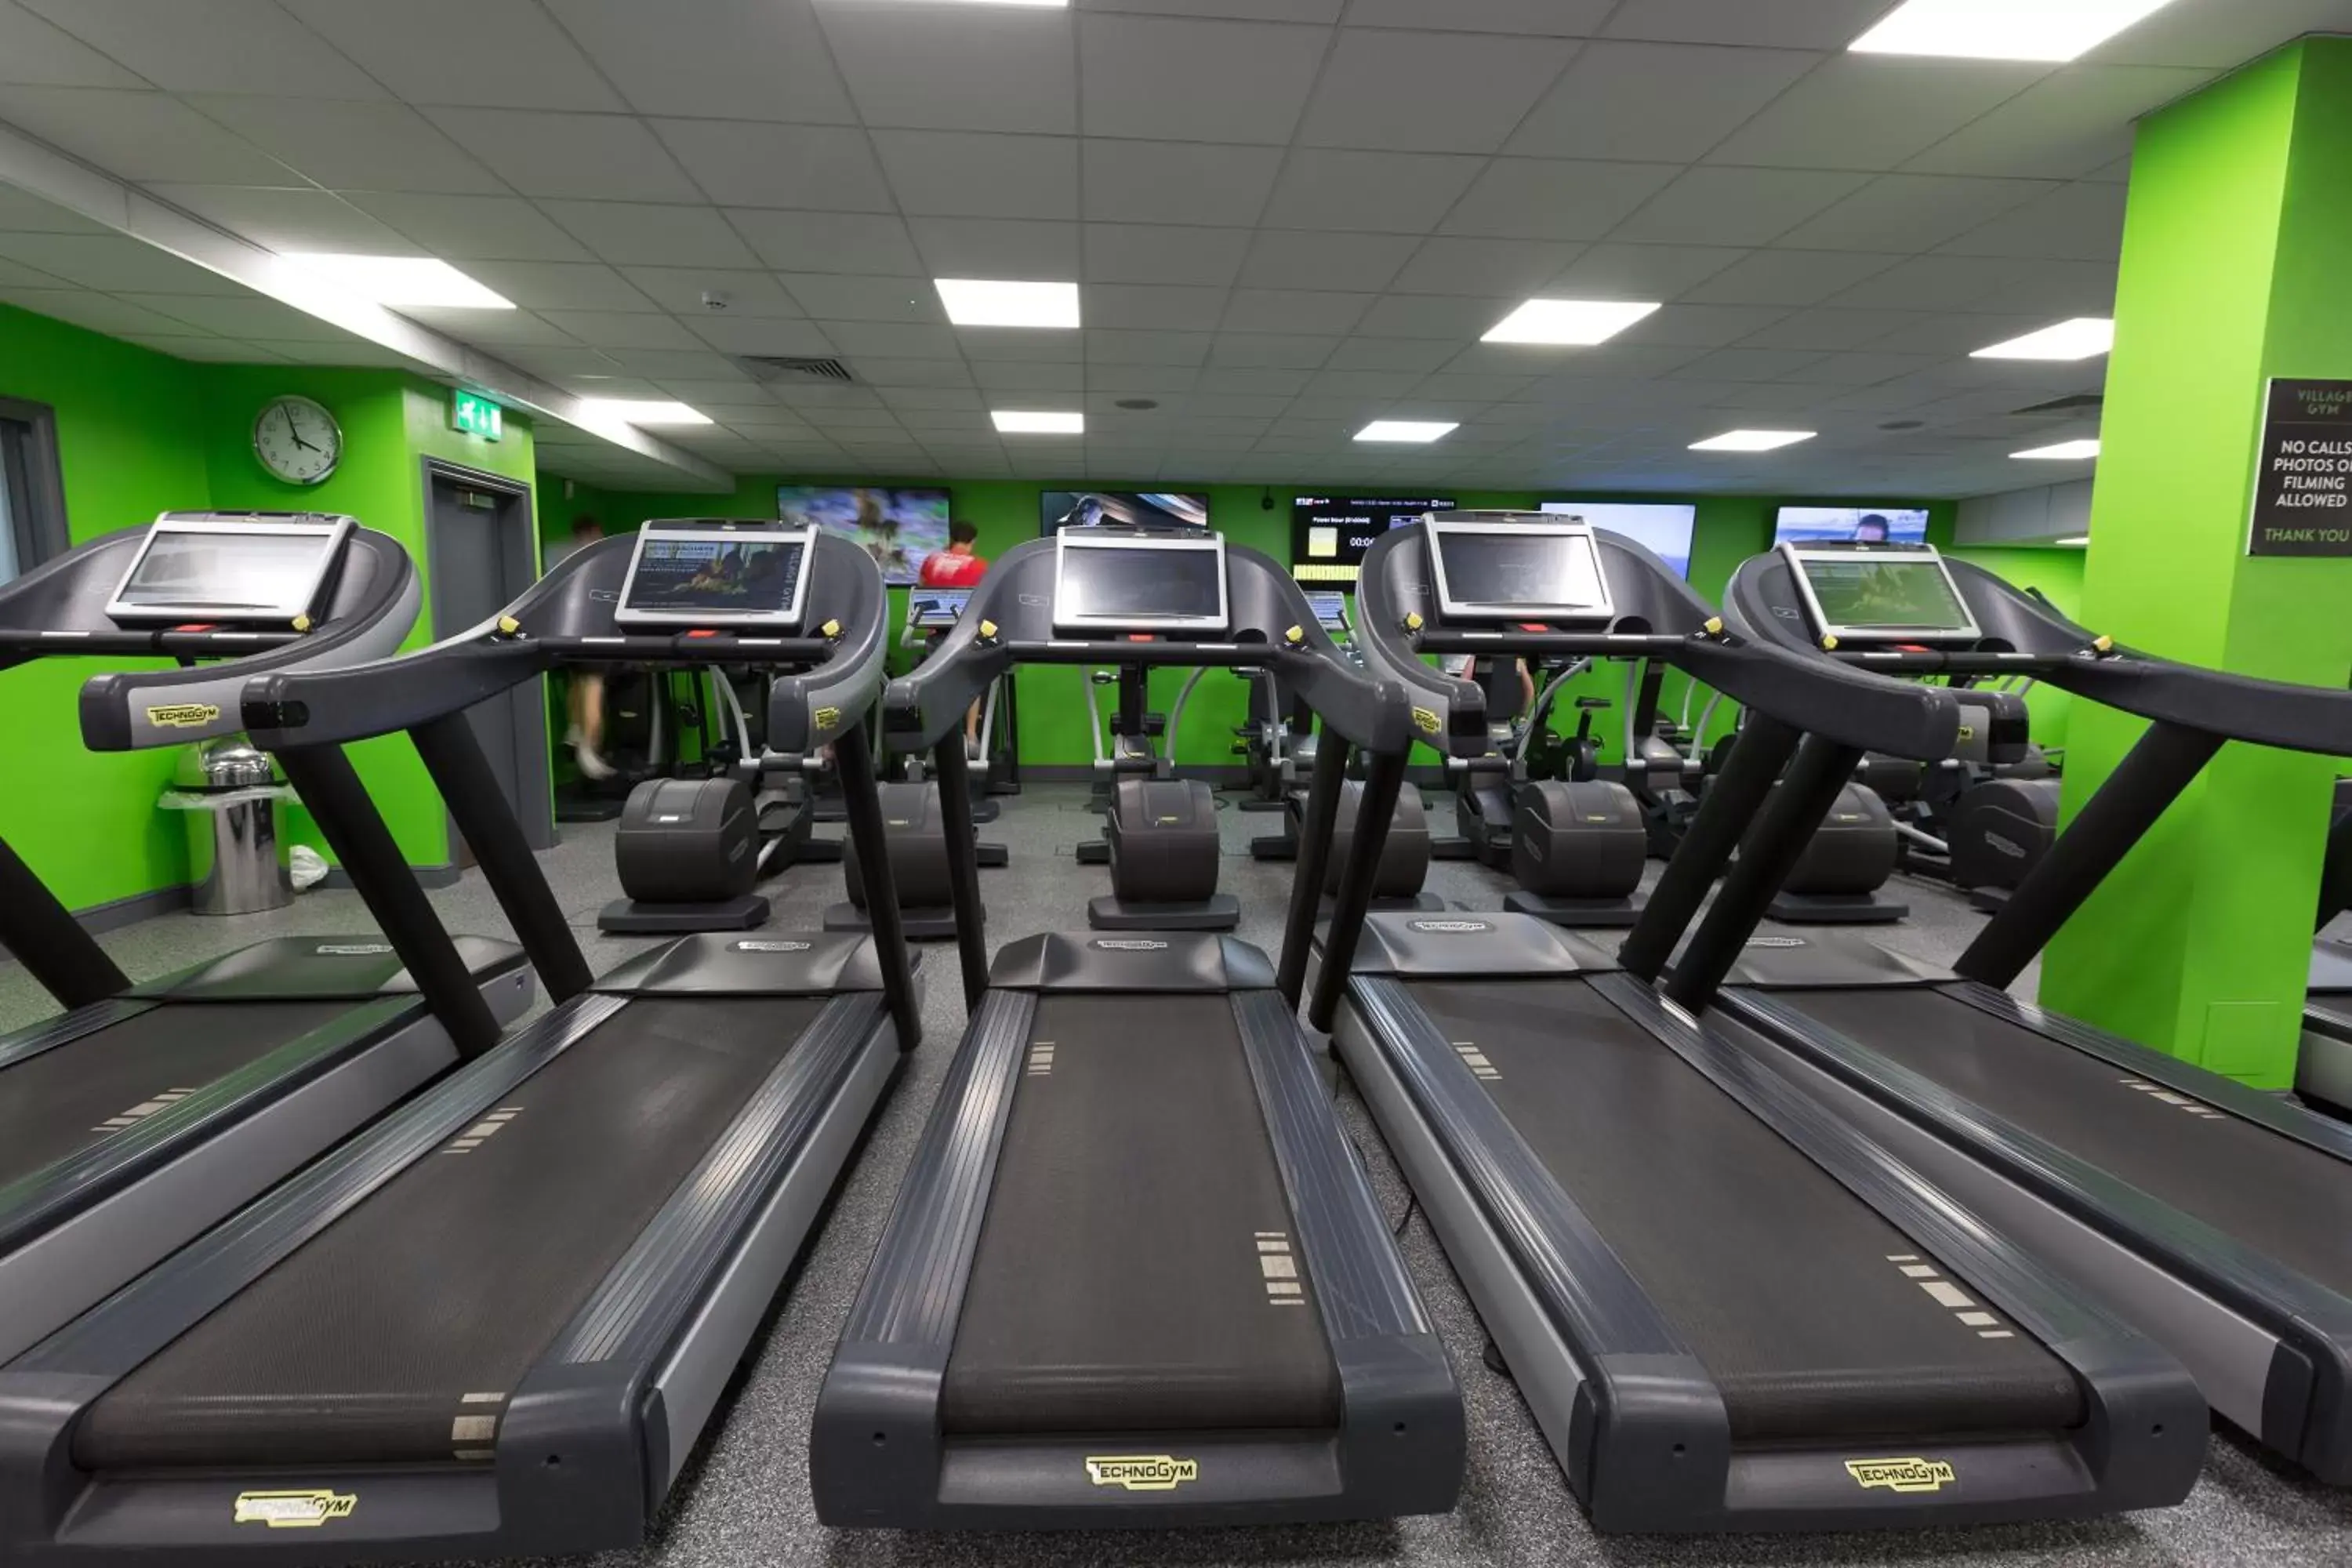 Fitness centre/facilities in Village Hotel Birmingham Walsall